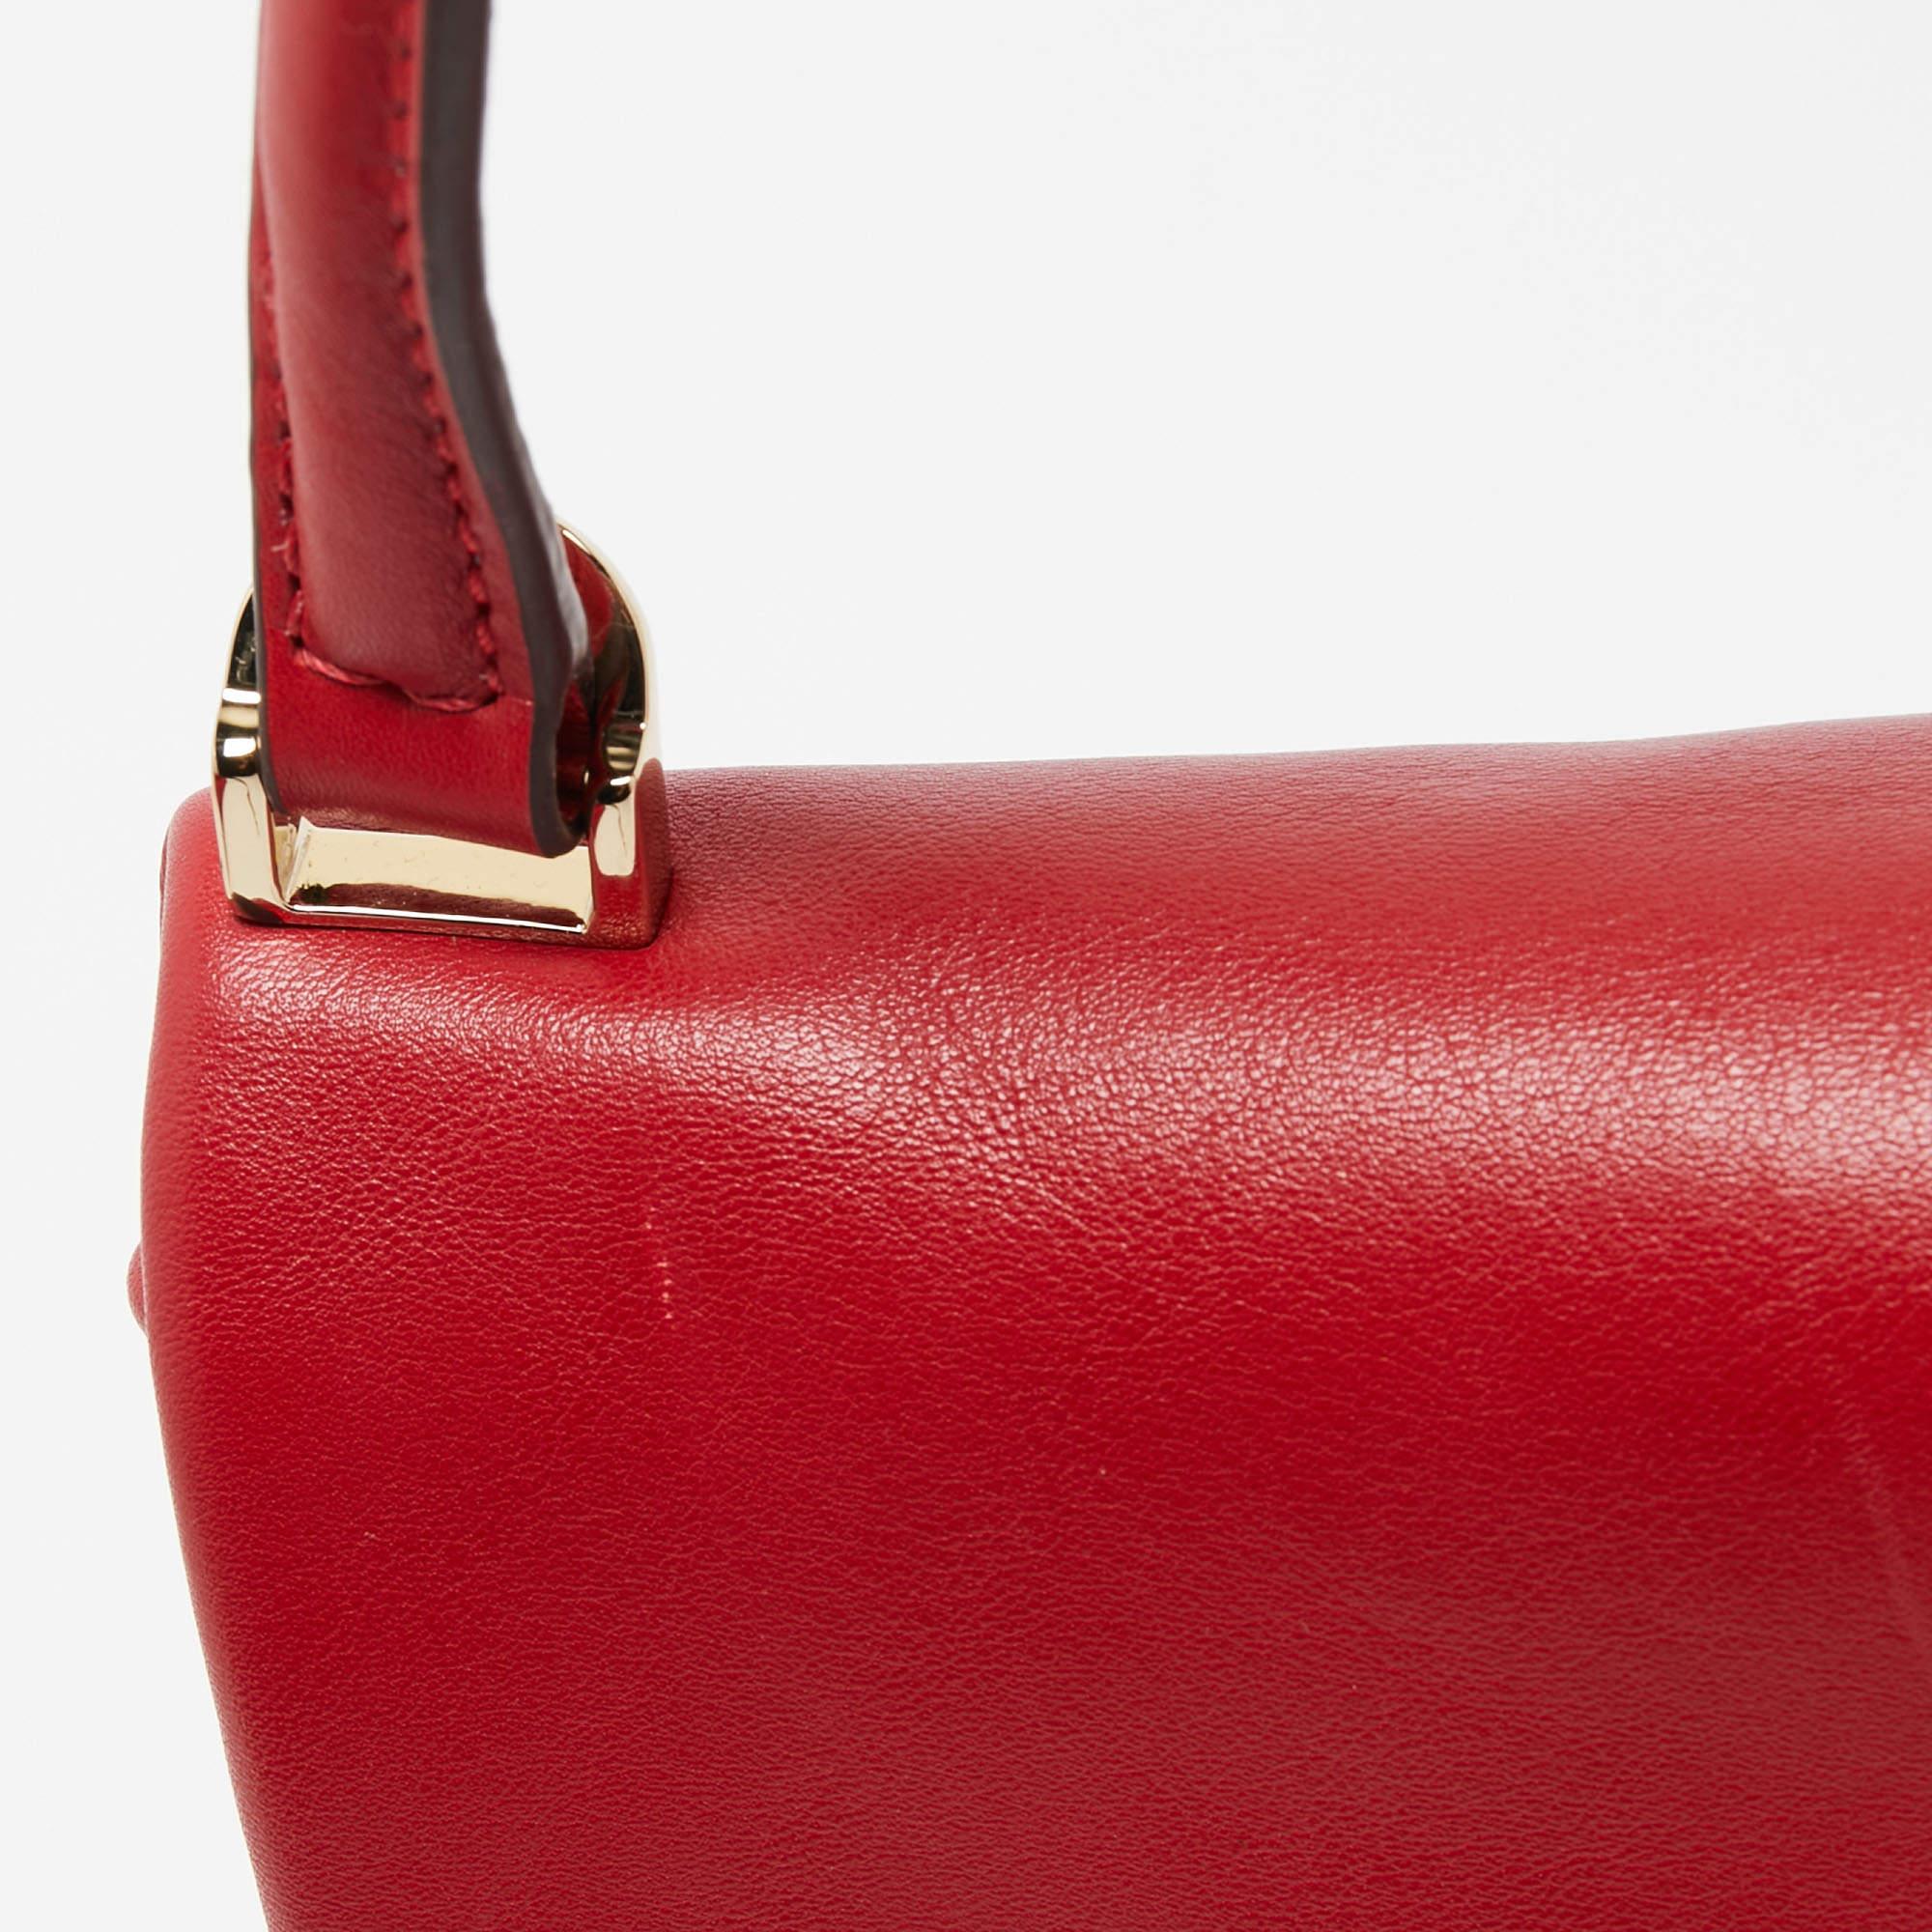 Carolina Herrera - Sac à main en cuir rouge avec rabat et barre métallique Pour femmes en vente